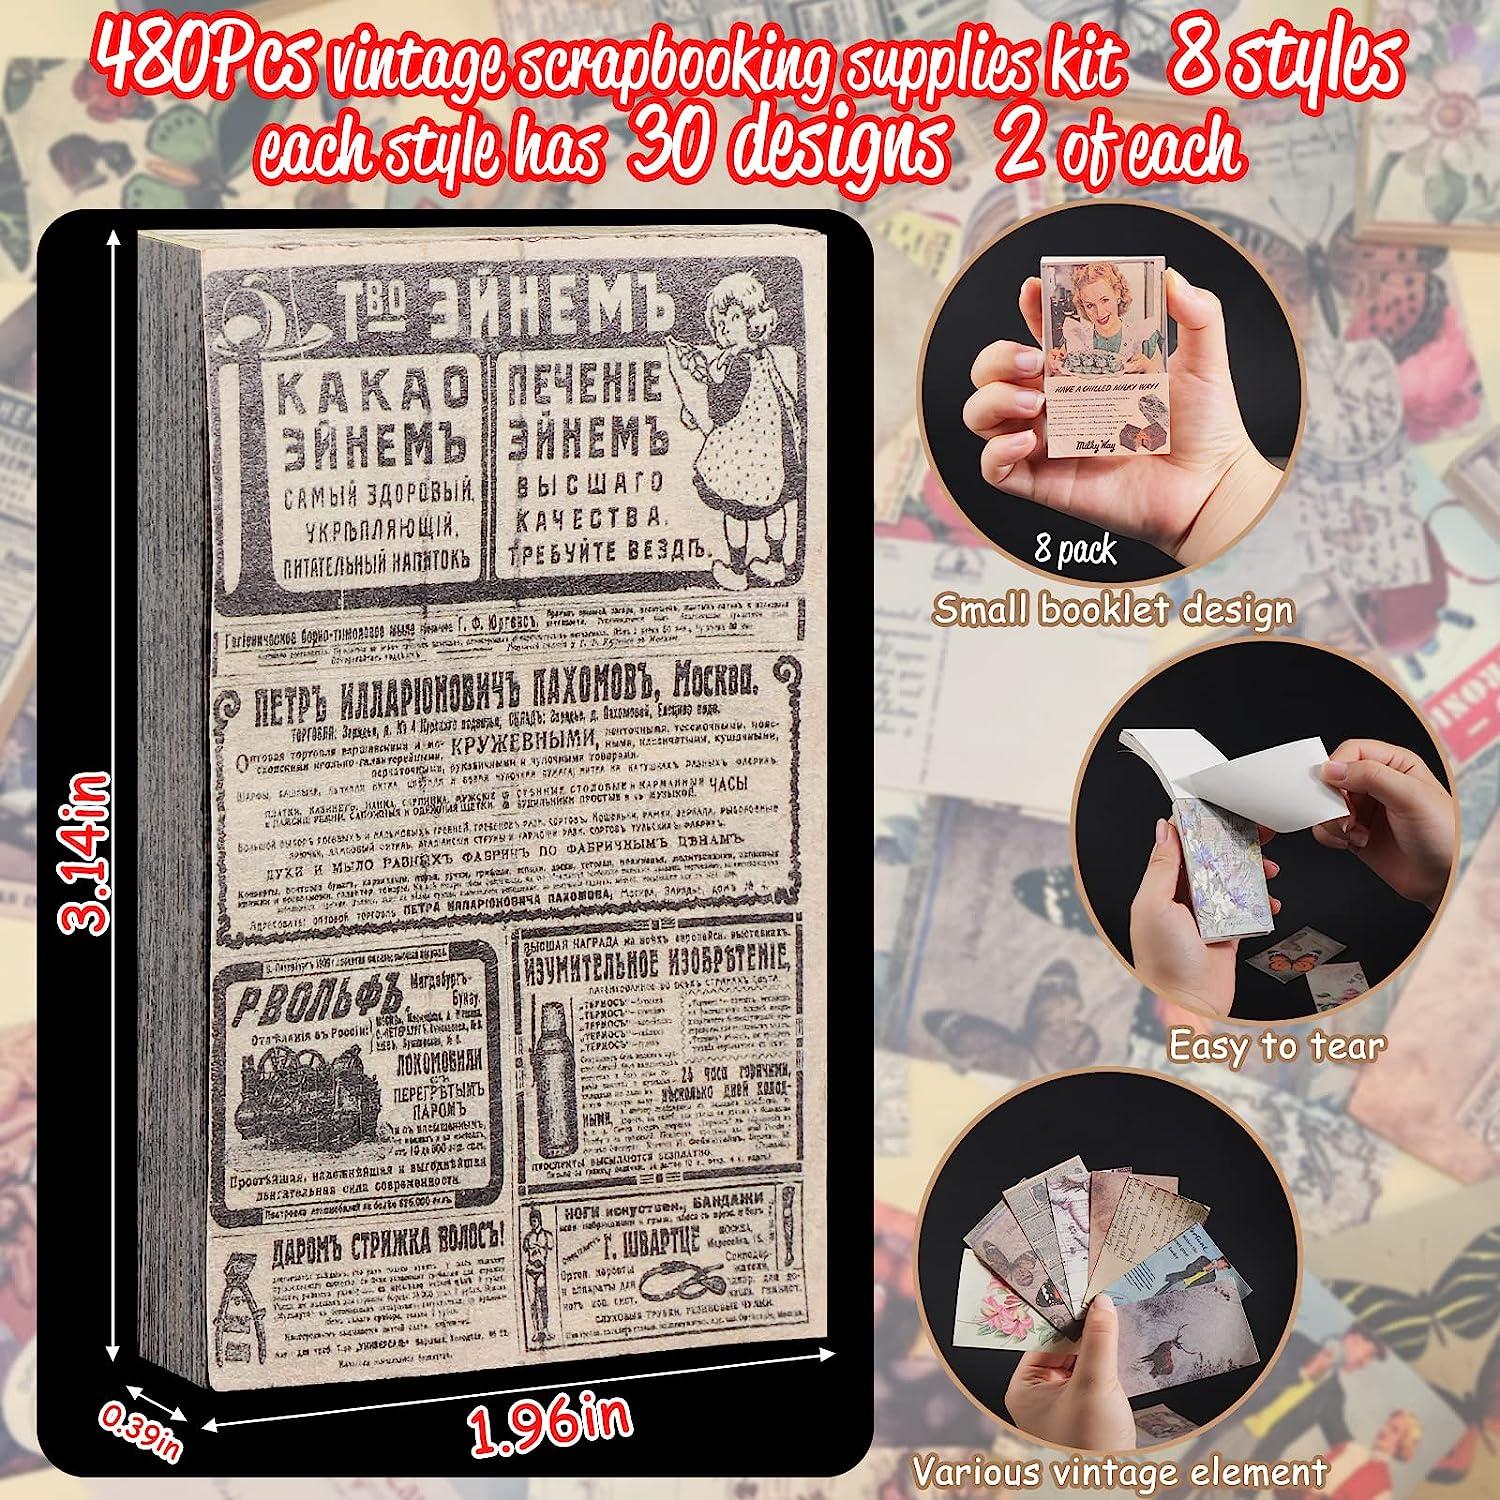  480Pcs Vintage Scrapbooking Supplies, BSRESIN Mini Scrapbook  Paper for Junk Journal Supplies Aesthetic Vintage, Scrapbooking  Embellishments & Decorations Journaling Supplies DIY : Arts, Crafts & Sewing